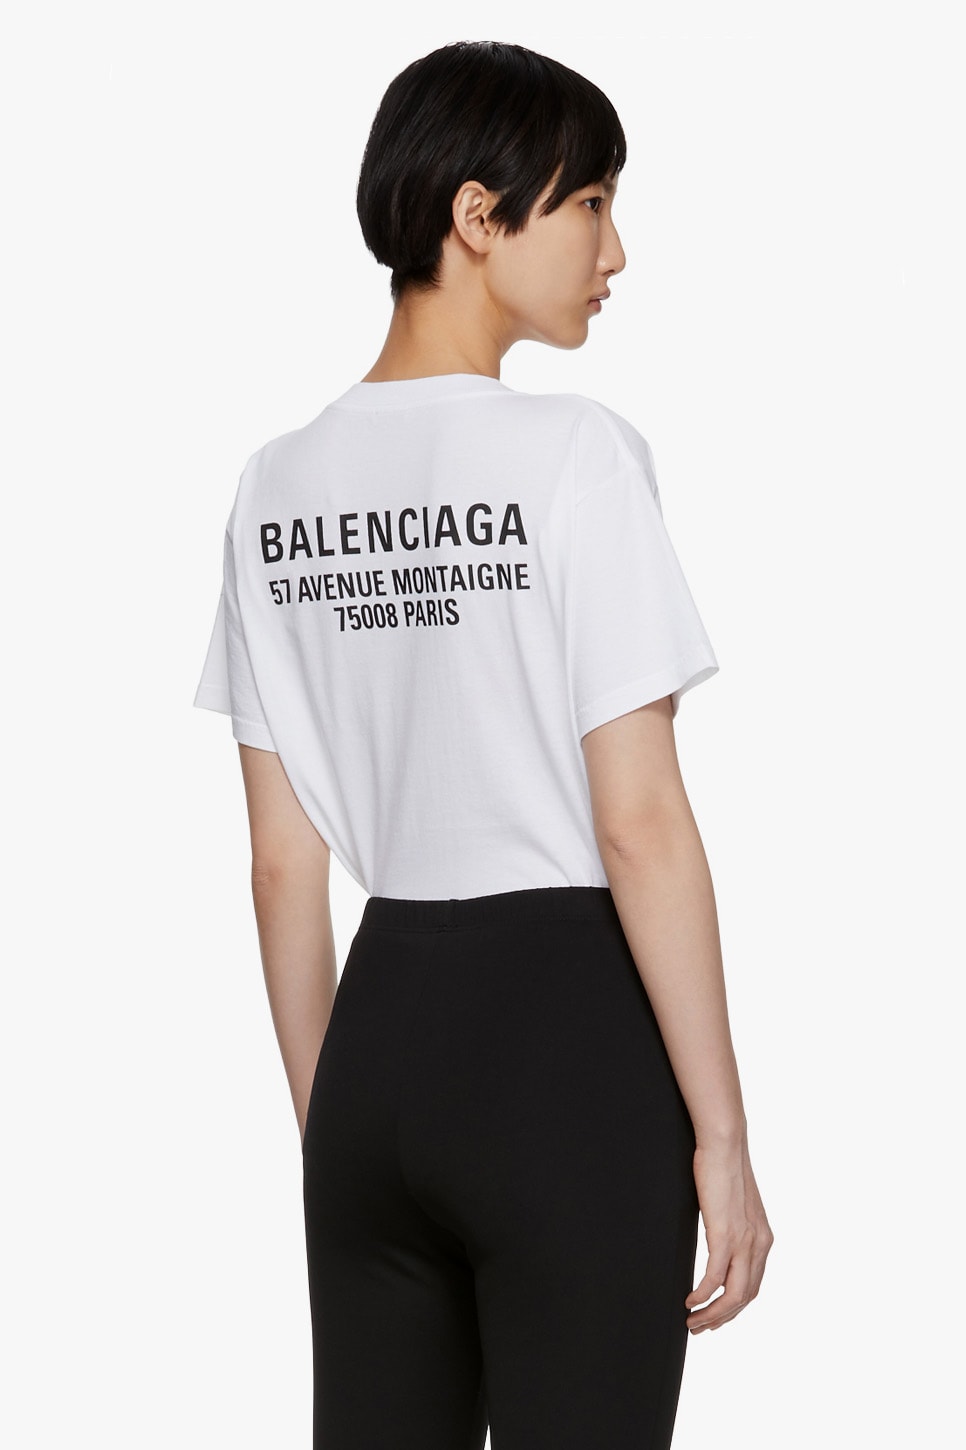 Balenciaga New Logo T-Shirt in White | Hypebae